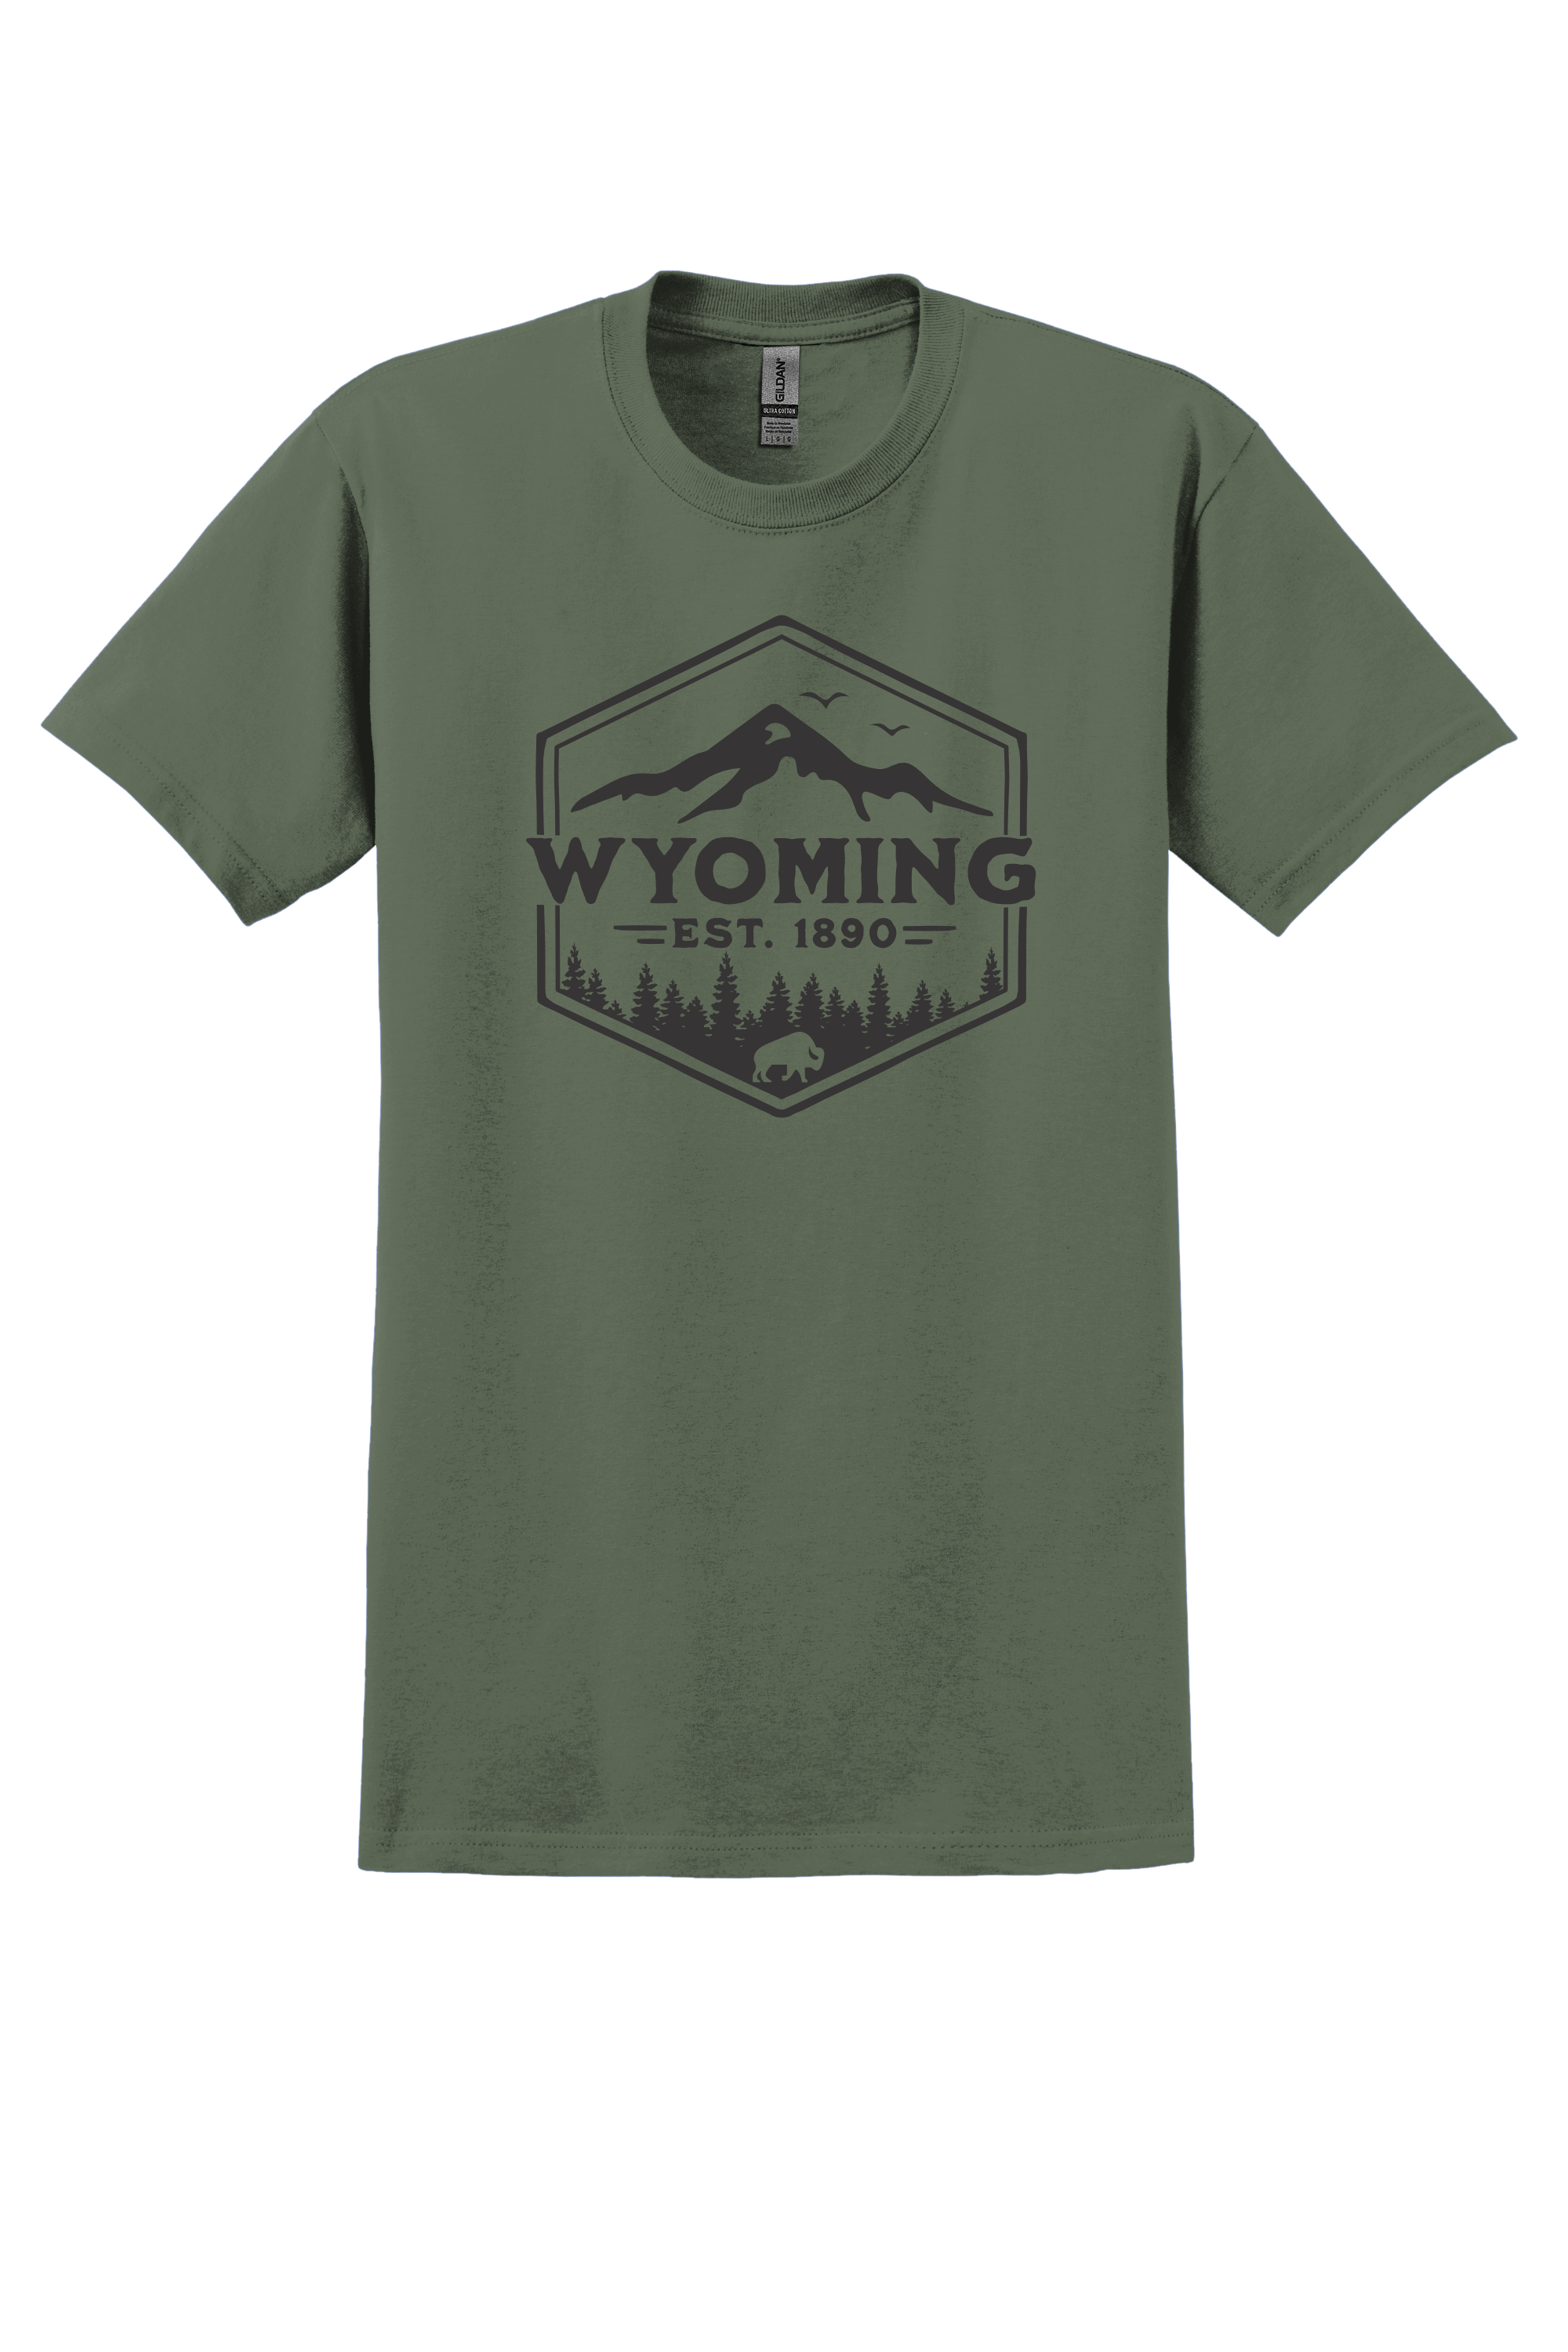 Wyoming Est 1890 Shirt